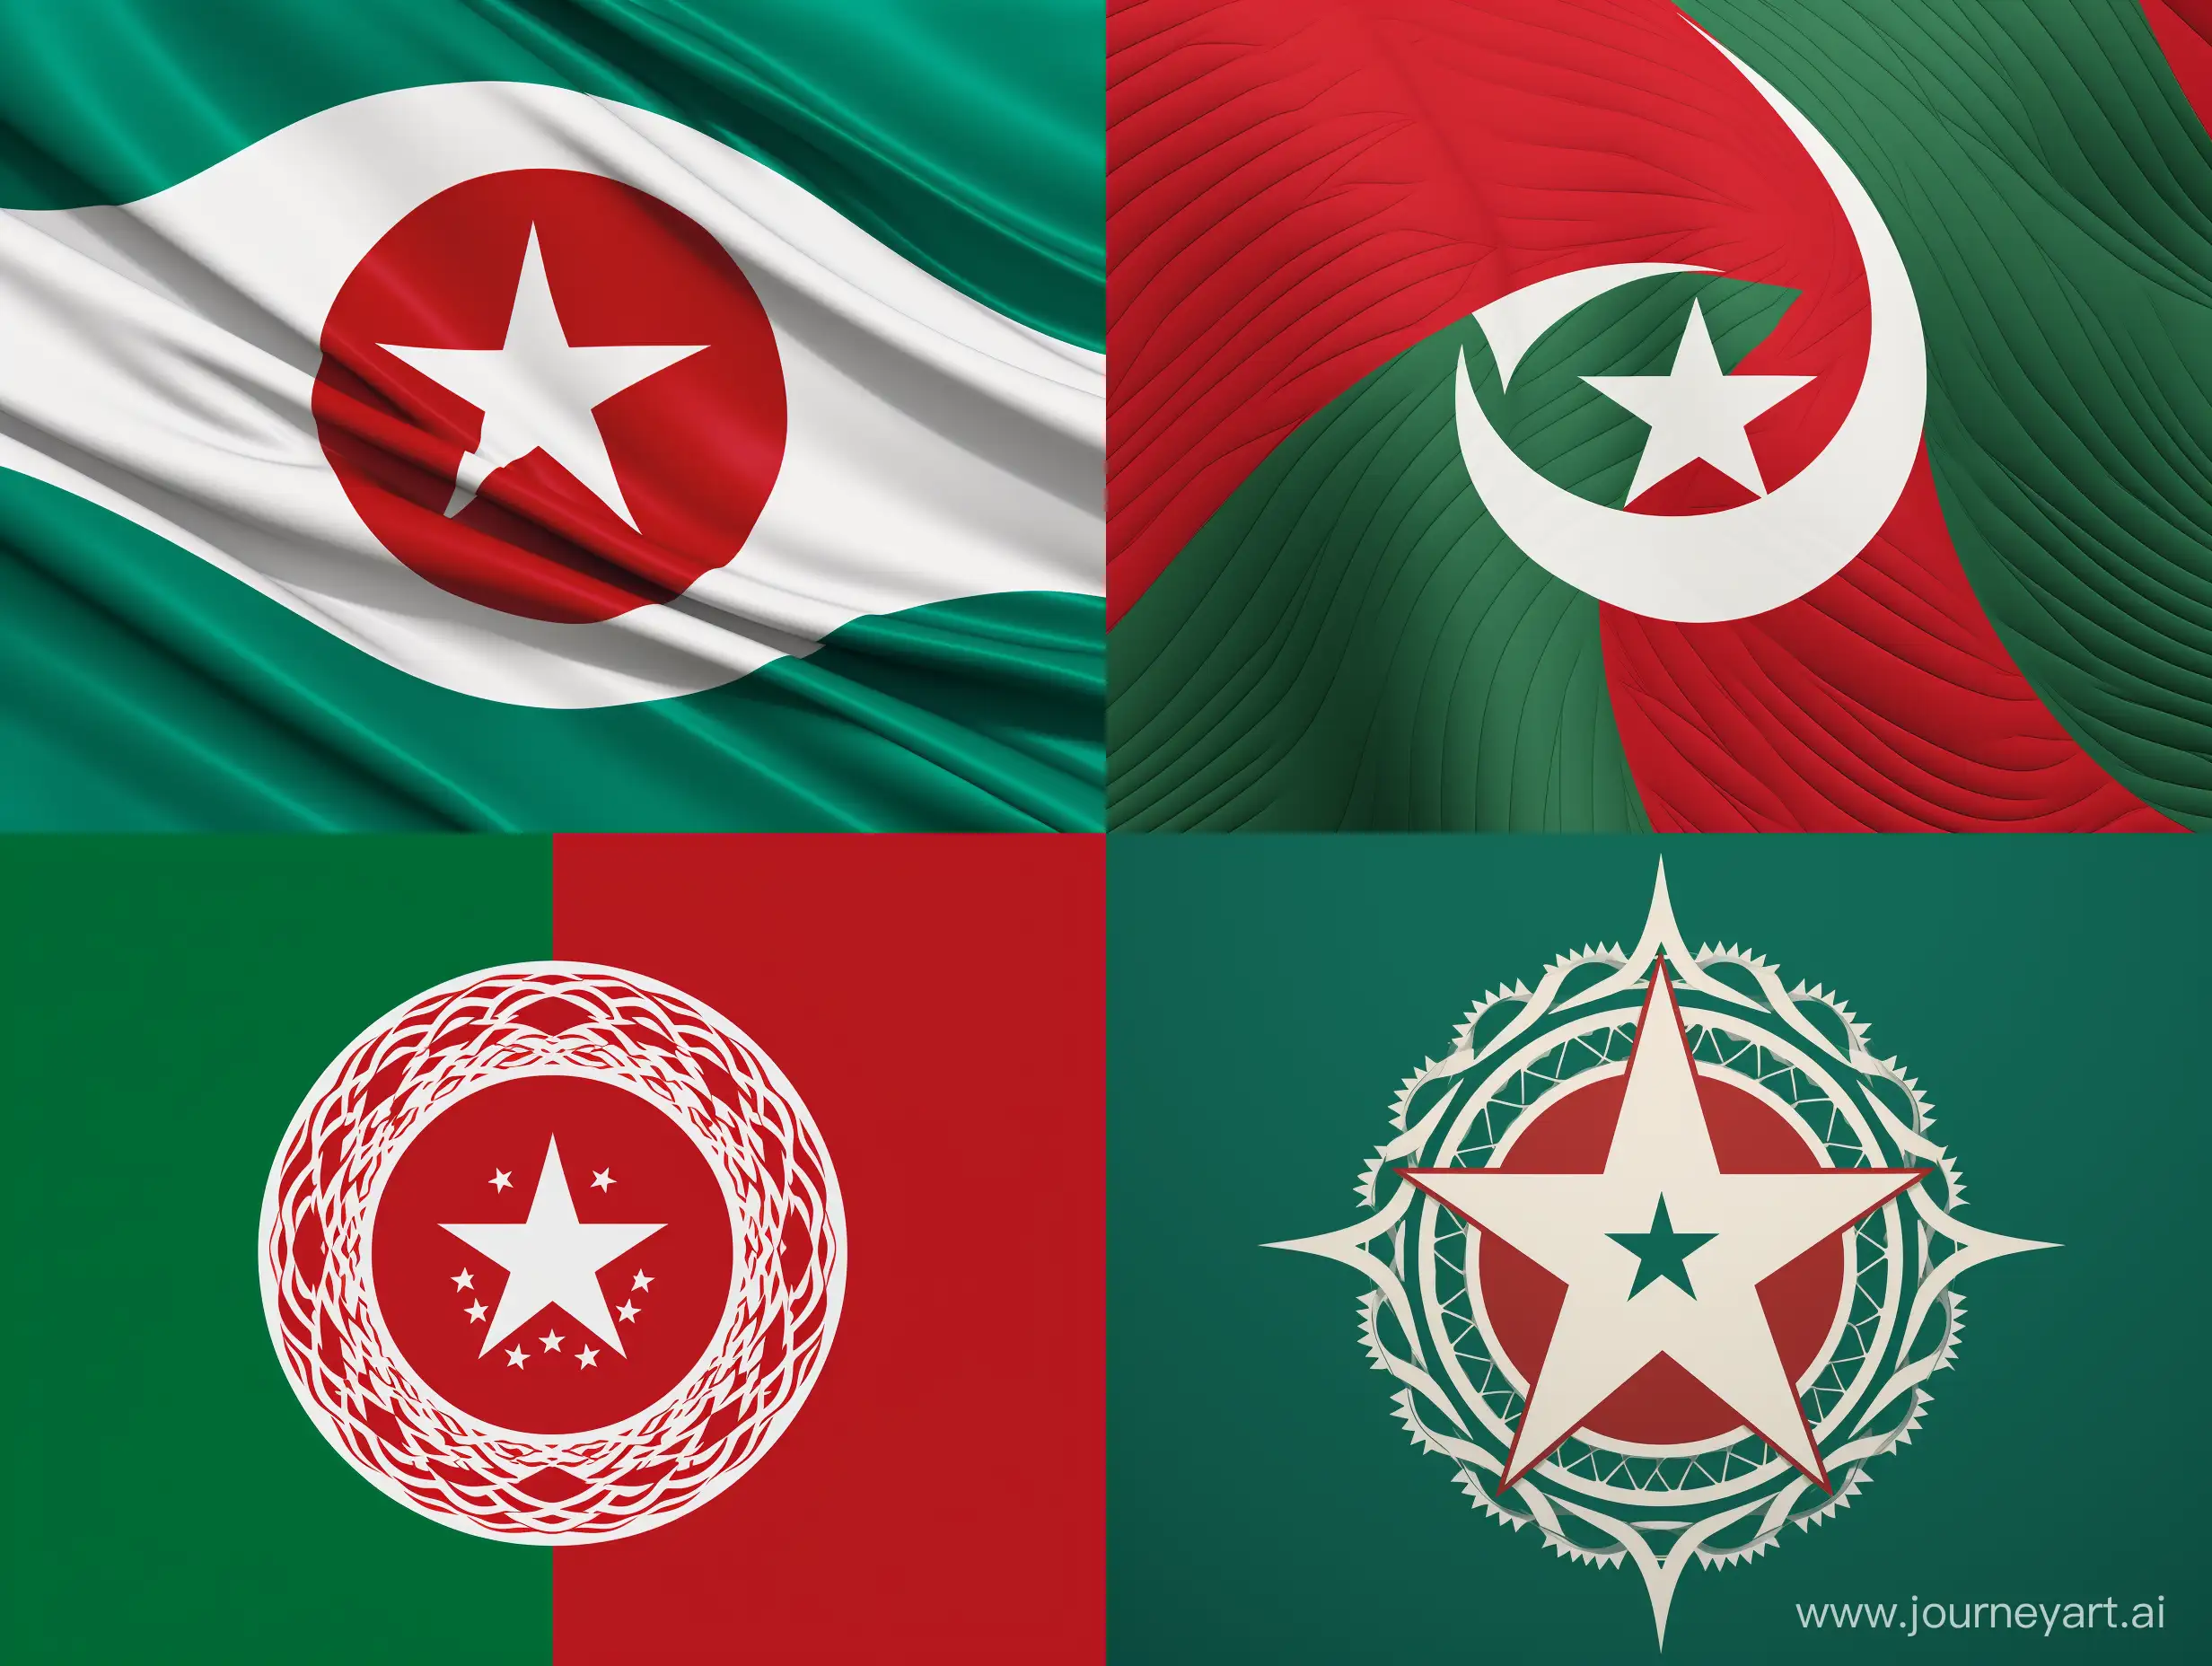 Futuristic-Blend-Unique-Flag-Design-Inspired-by-Algerian-Moroccan-and-Tunisian-Flags